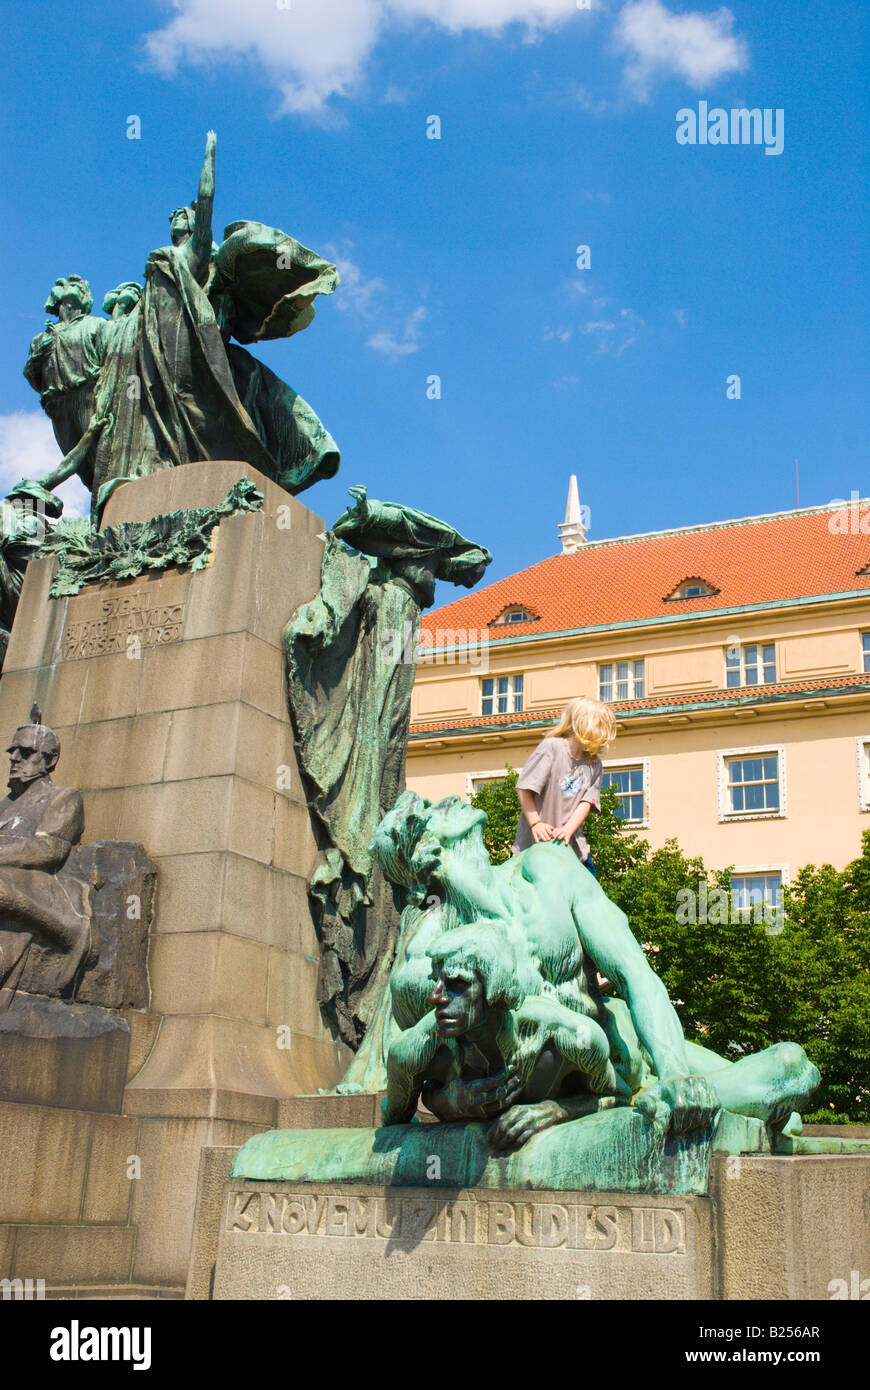 Palackeho monument at Palackeho namesti in new town of Prague Czech Republic Europe Stock Photo